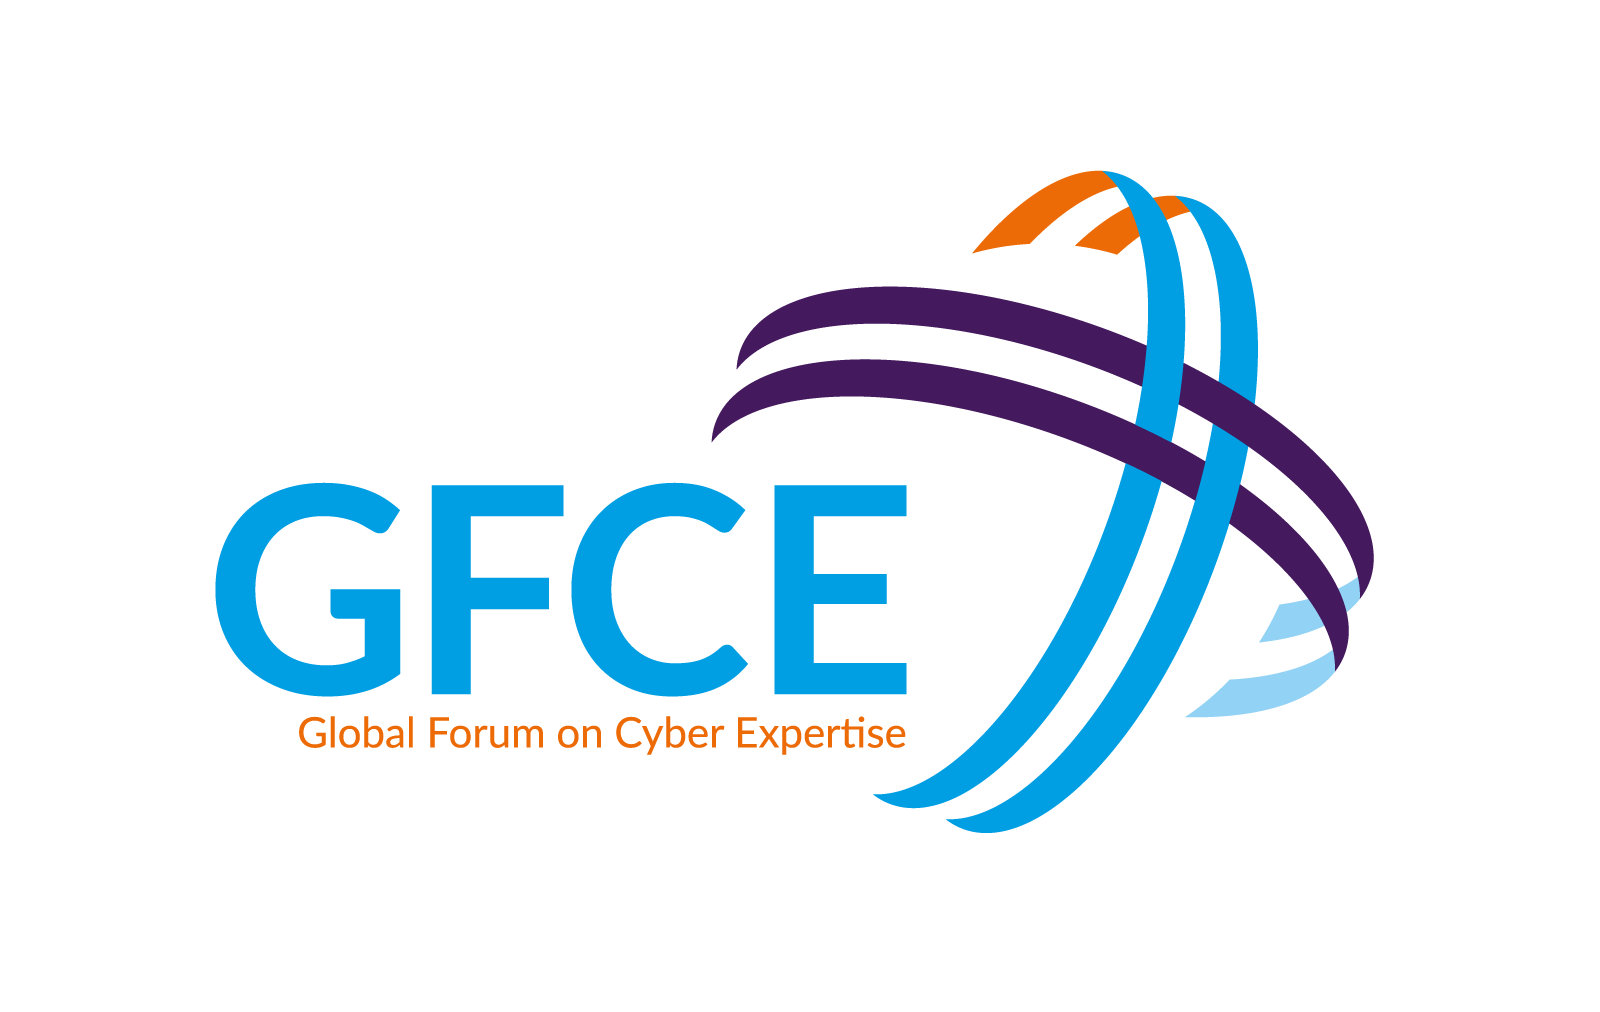 Gfce_Logo_Rgb Big.png - Ar International, Transparent background PNG HD thumbnail